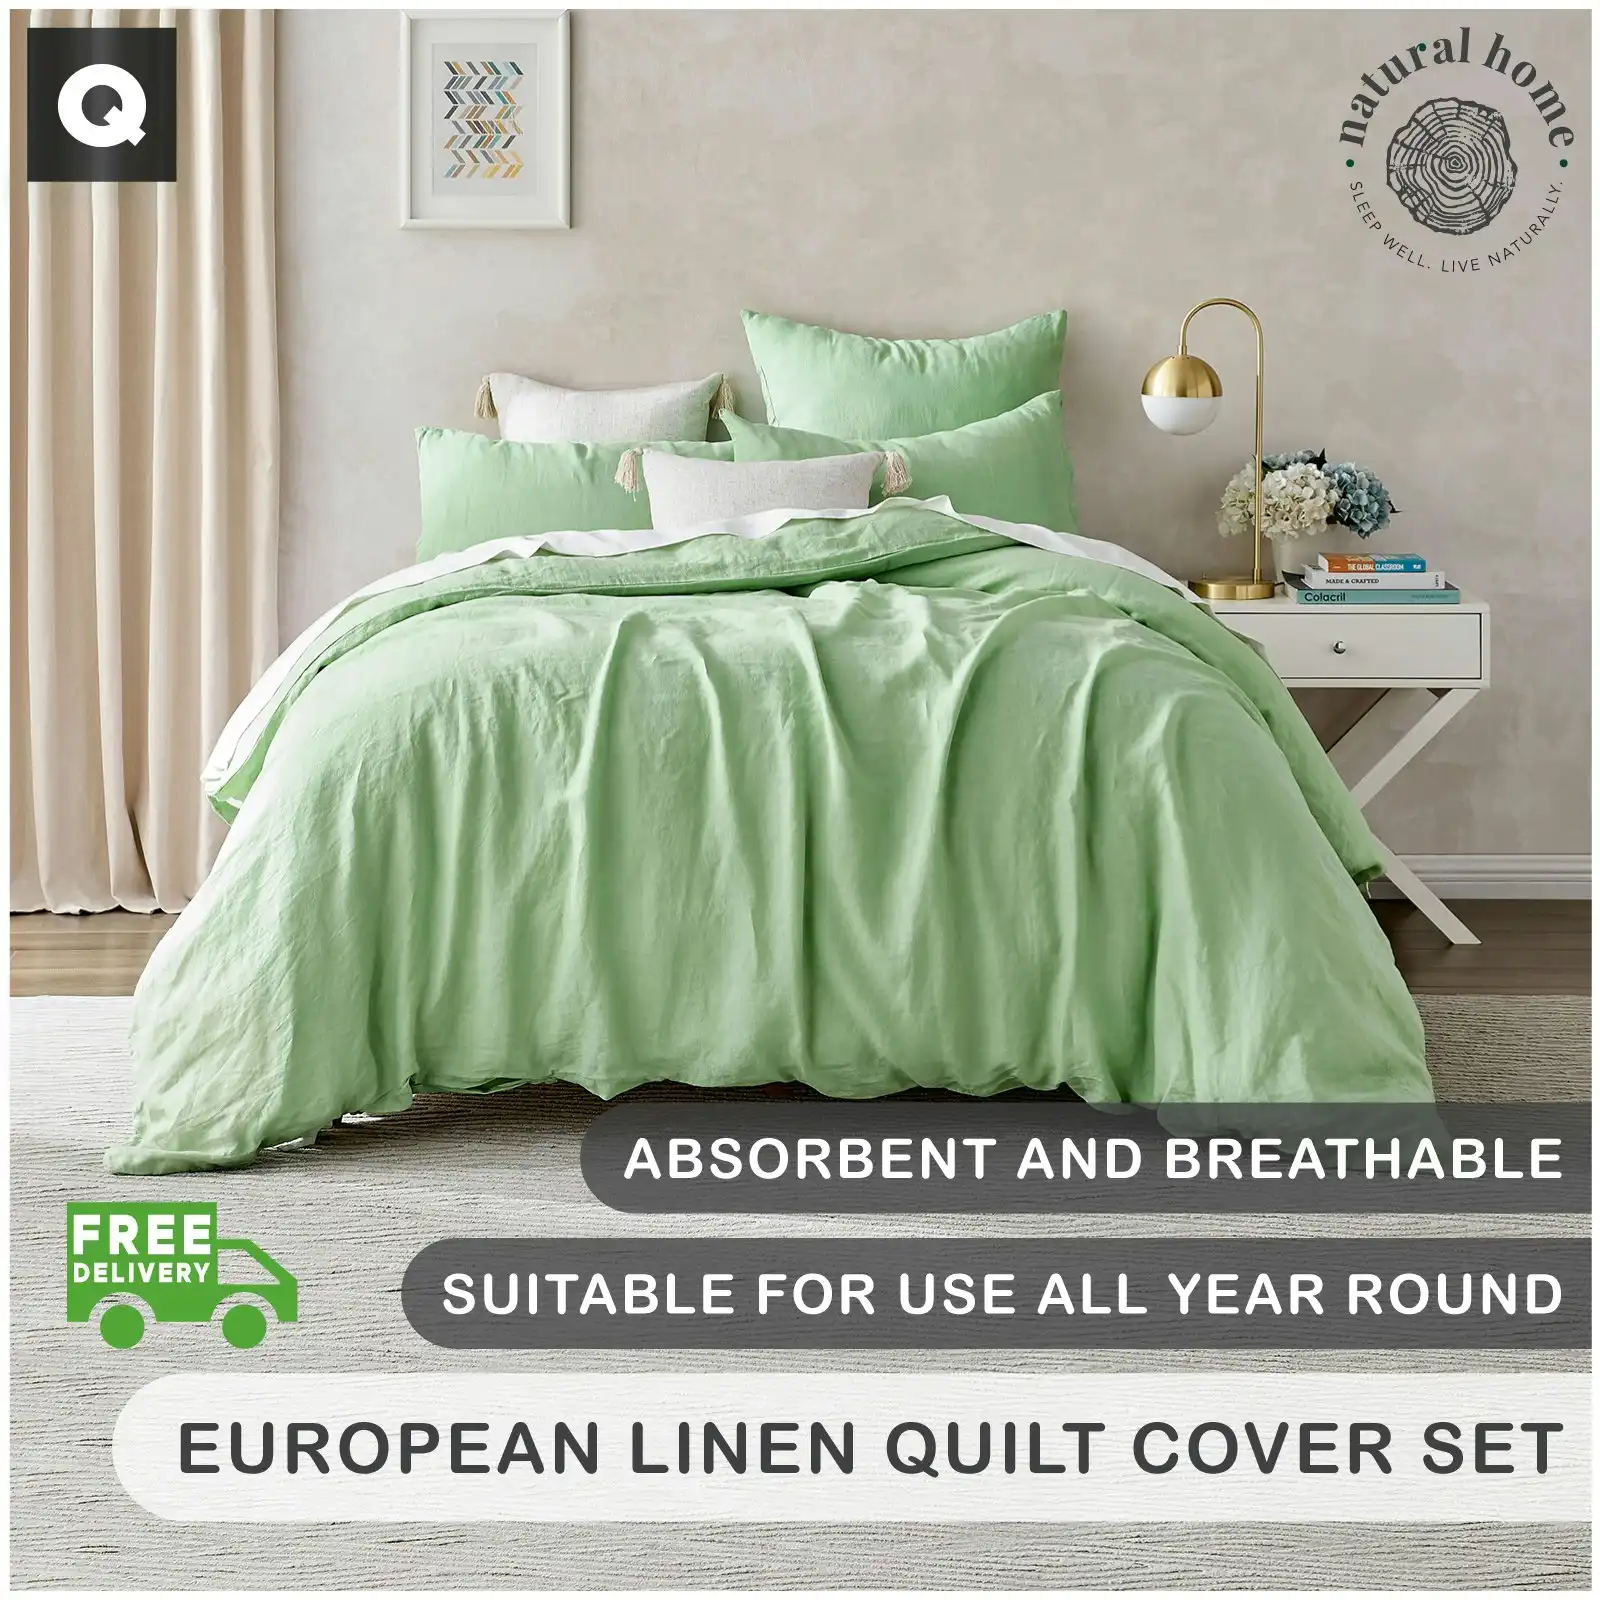 Natural Home Linen 100% European Flax Linen Quilt Cover Set - Sage - Queen Bed